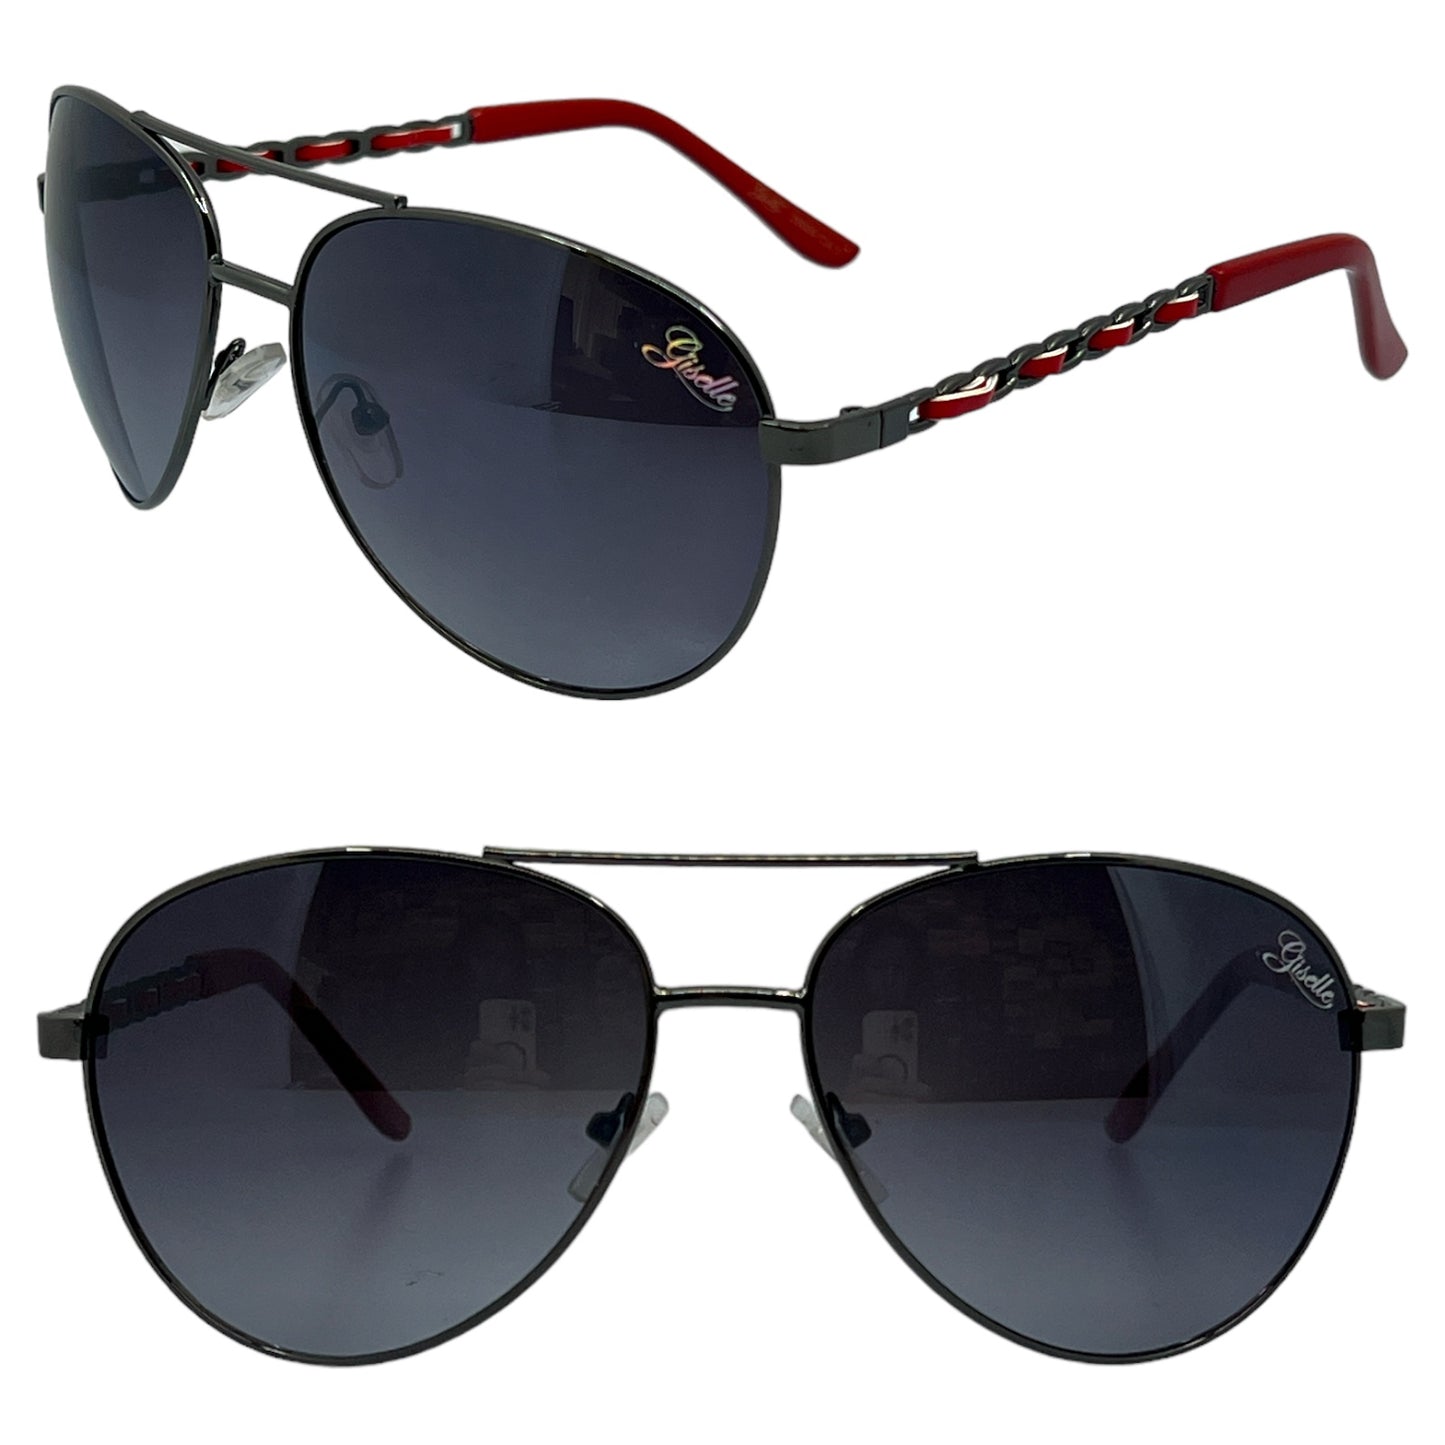 Designer Giselle Women's Pilot Sunglasses with Chain temples